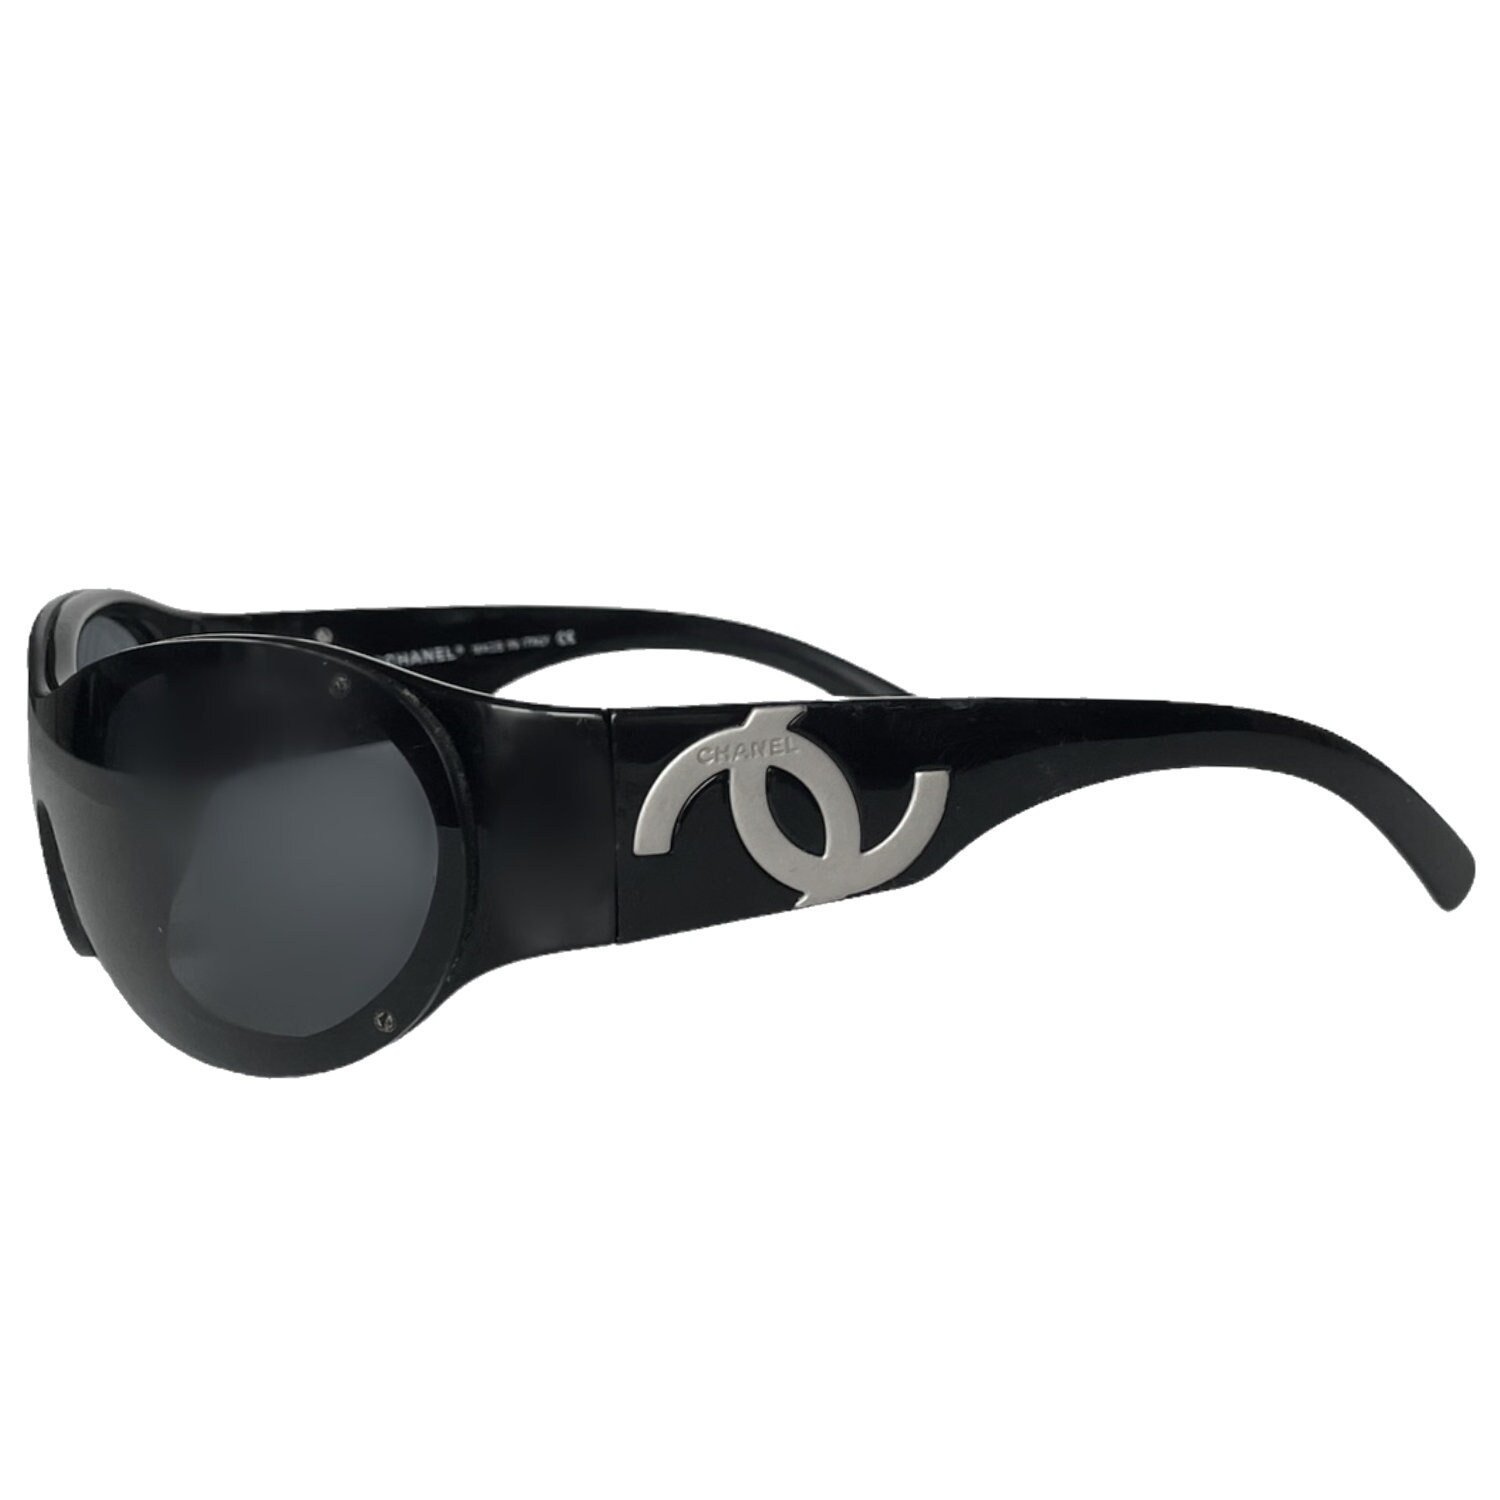 Chanel Sunglasses Authentic Chanel Logo Wraparound Ski -  Denmark